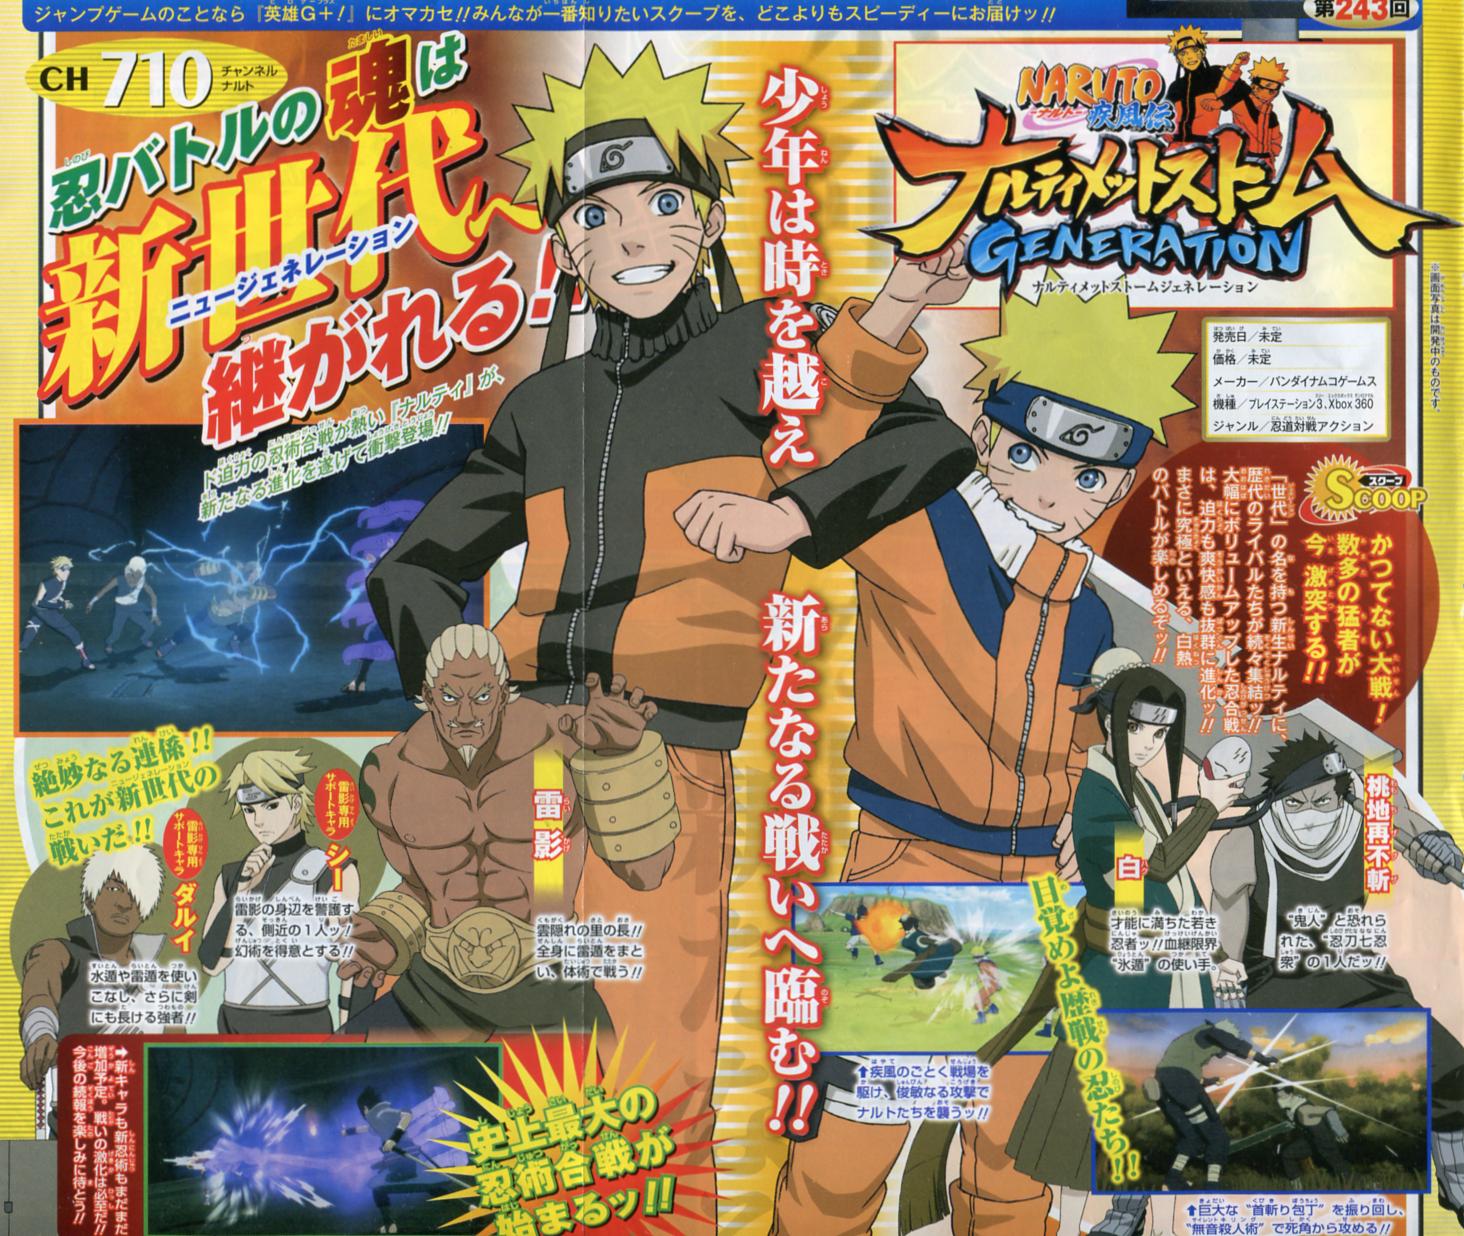 Naruto-Generation-Scan.jpg